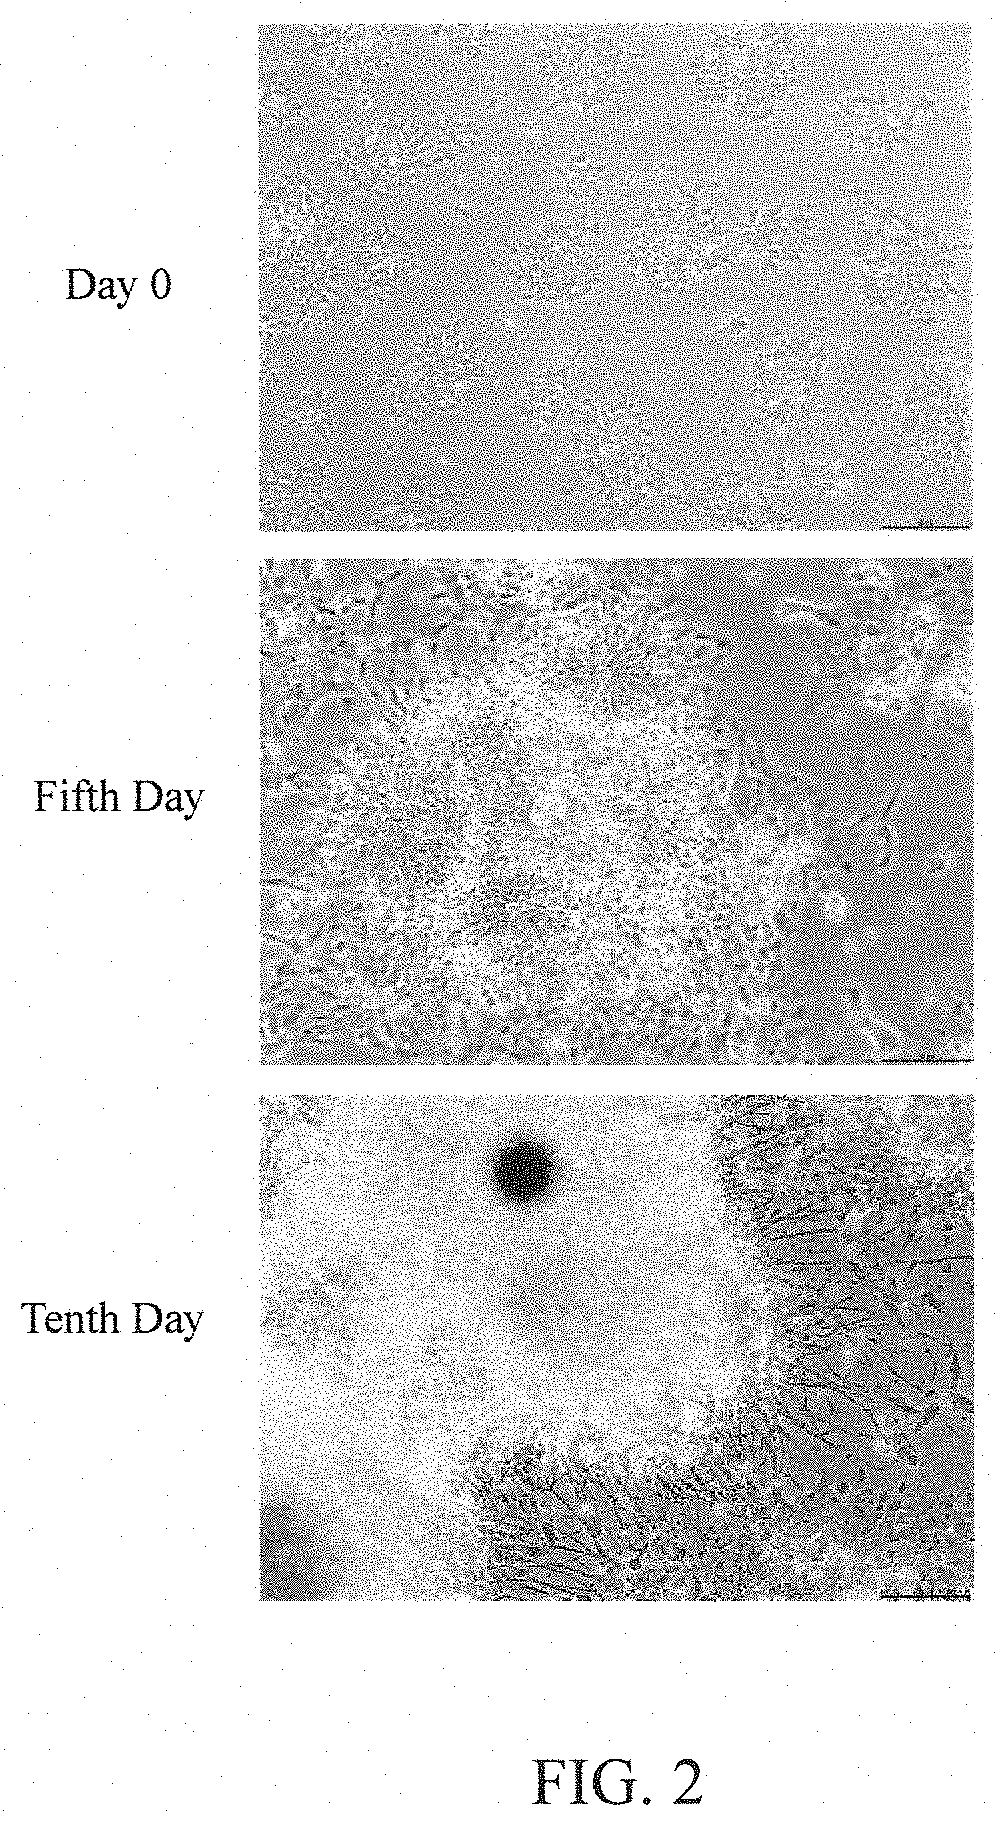 Use of n-butylidenephthalide in dopaminergic progenitor cell transplantation